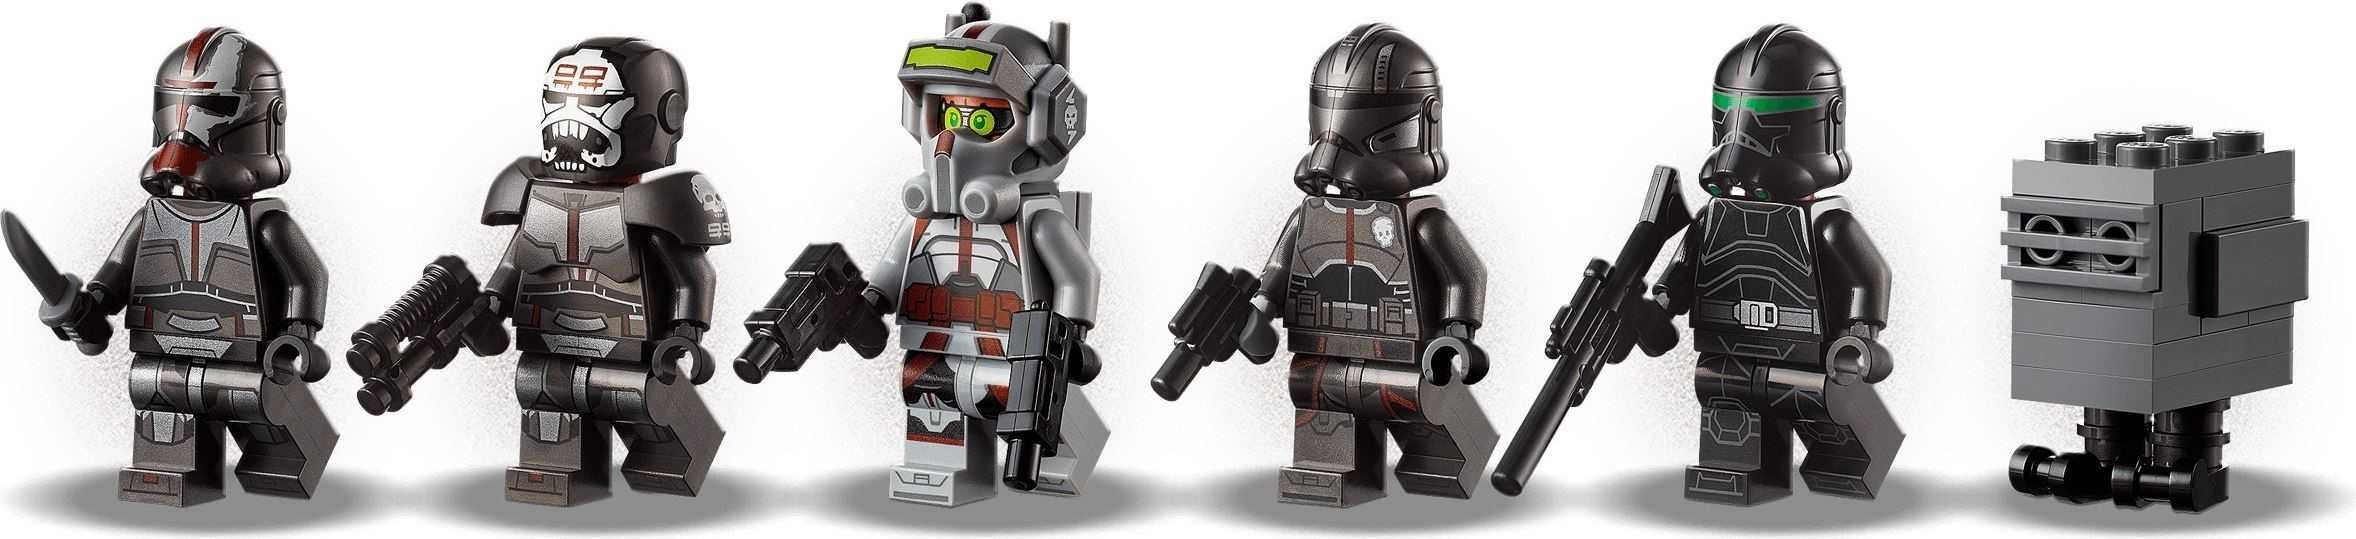 LEGO Star Wars - 75314 : The Bad Batch Attack Shuttle -NOU sigilat